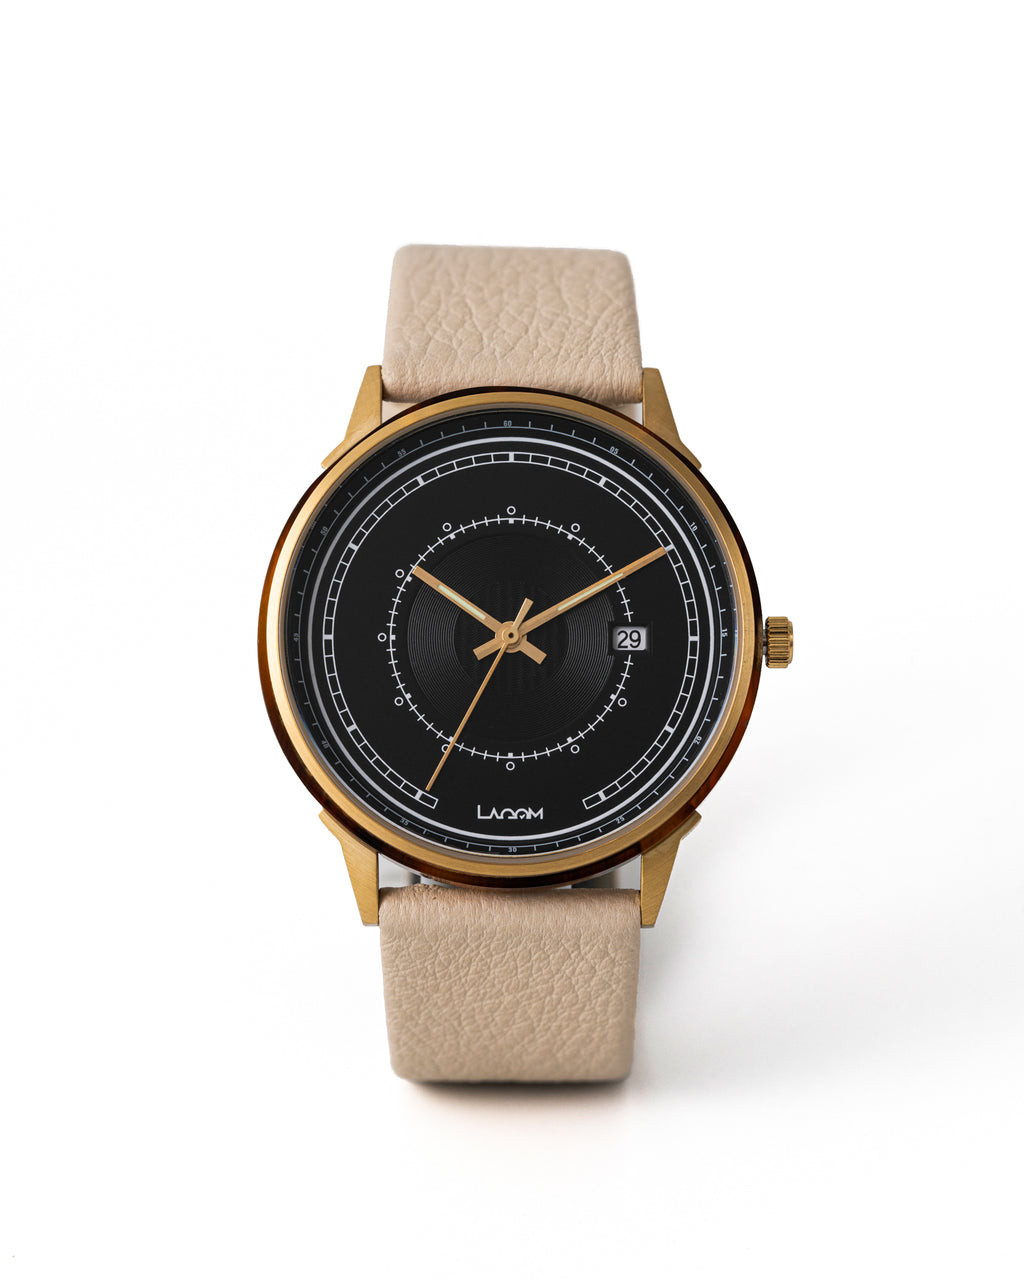 SAMPLE) LW036-Gold.Black.Beige (SAMPLE) – LAGOM Watches